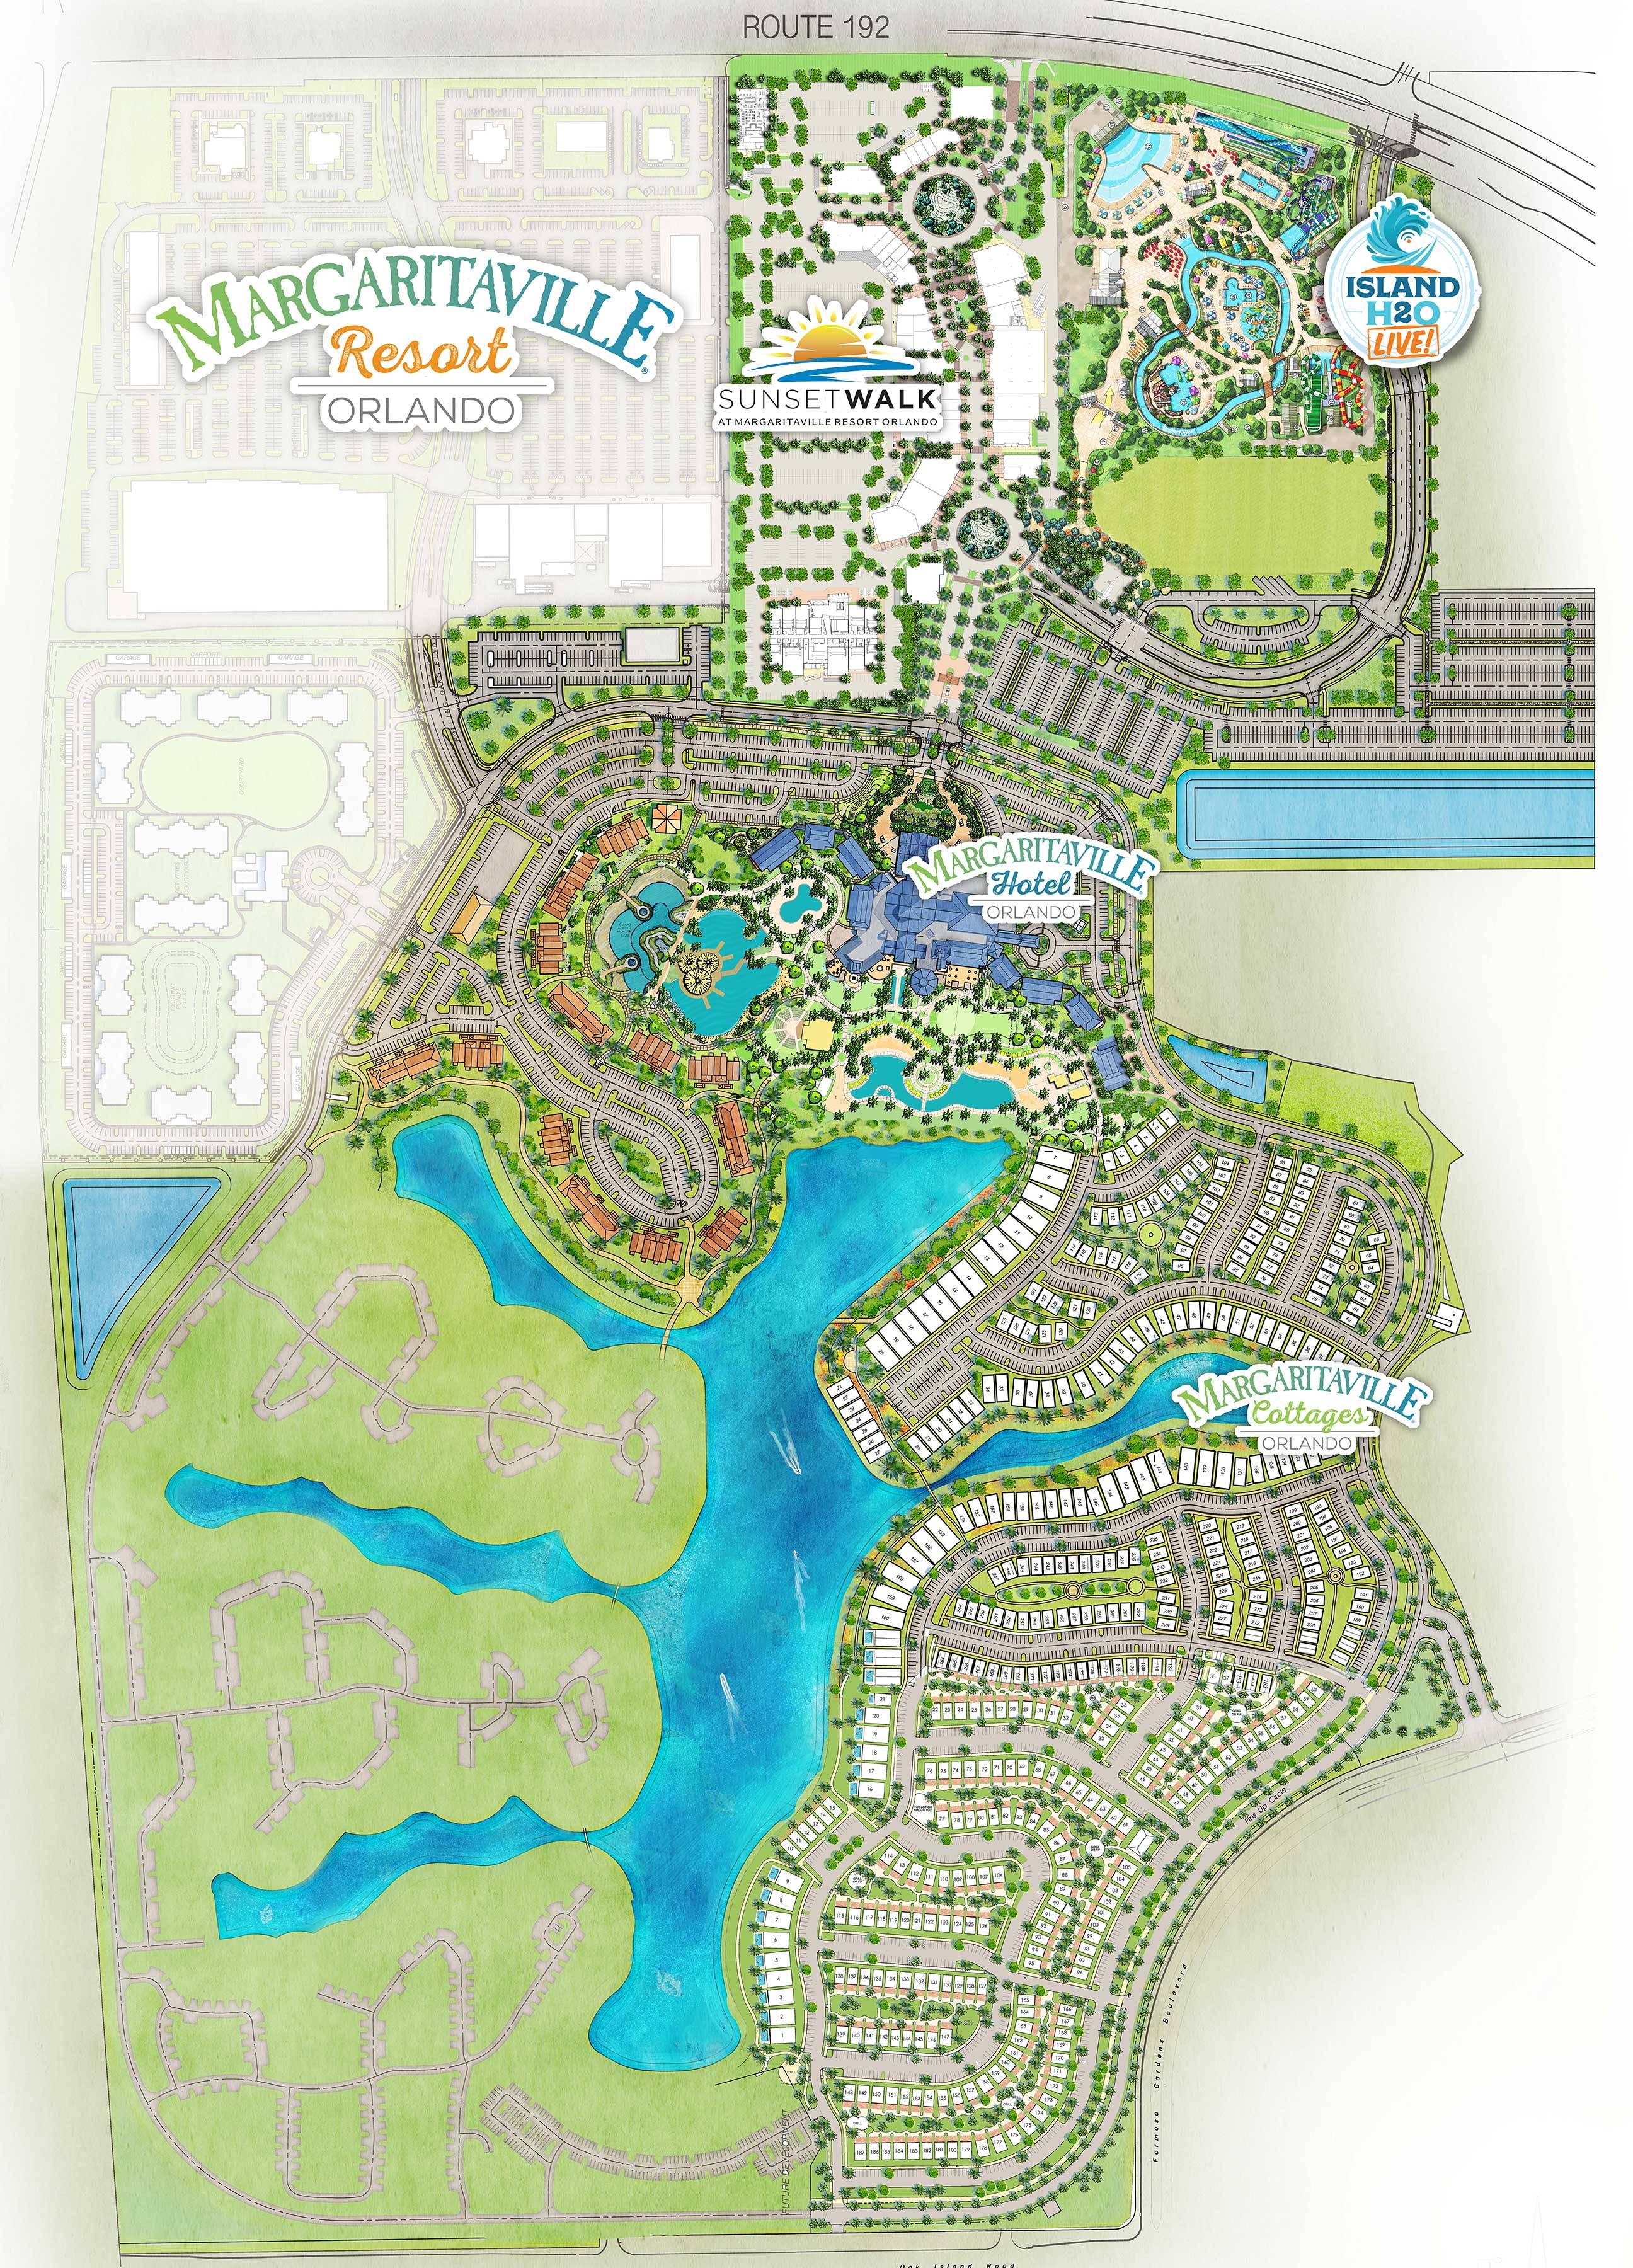 Margaritaville Resort Orlando site map